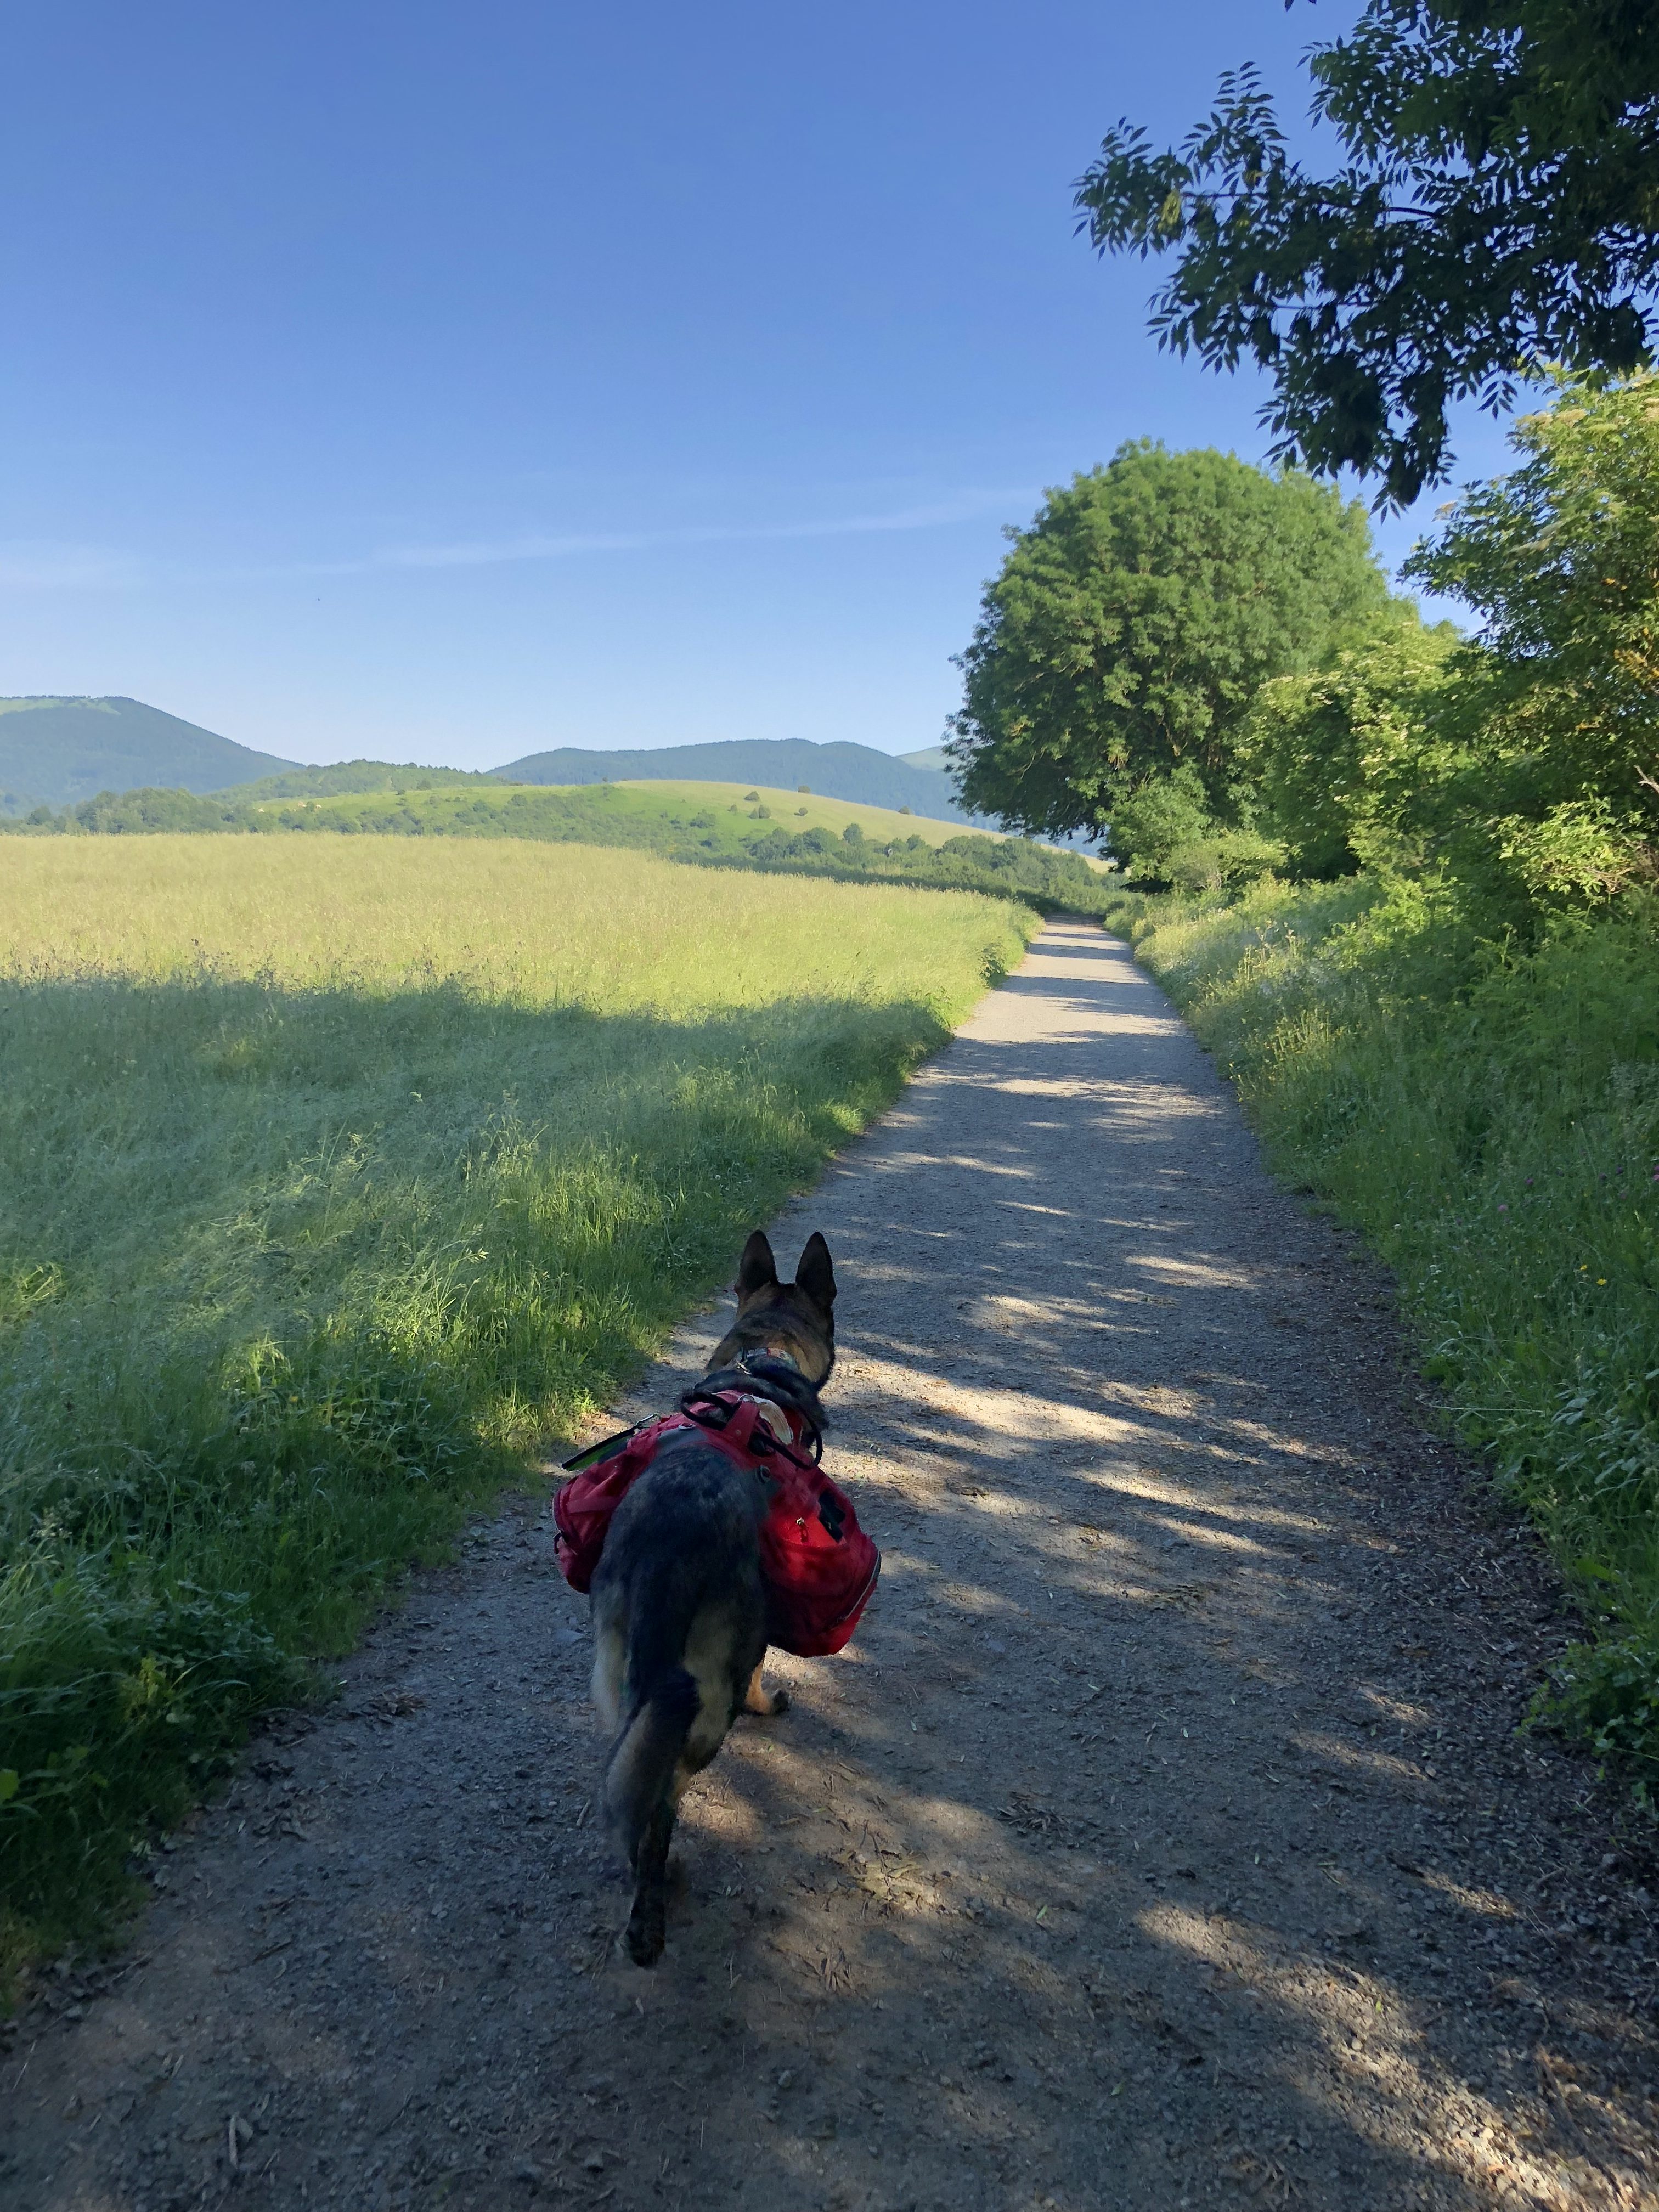 Day 2 – Roncesvalles to Zubiri